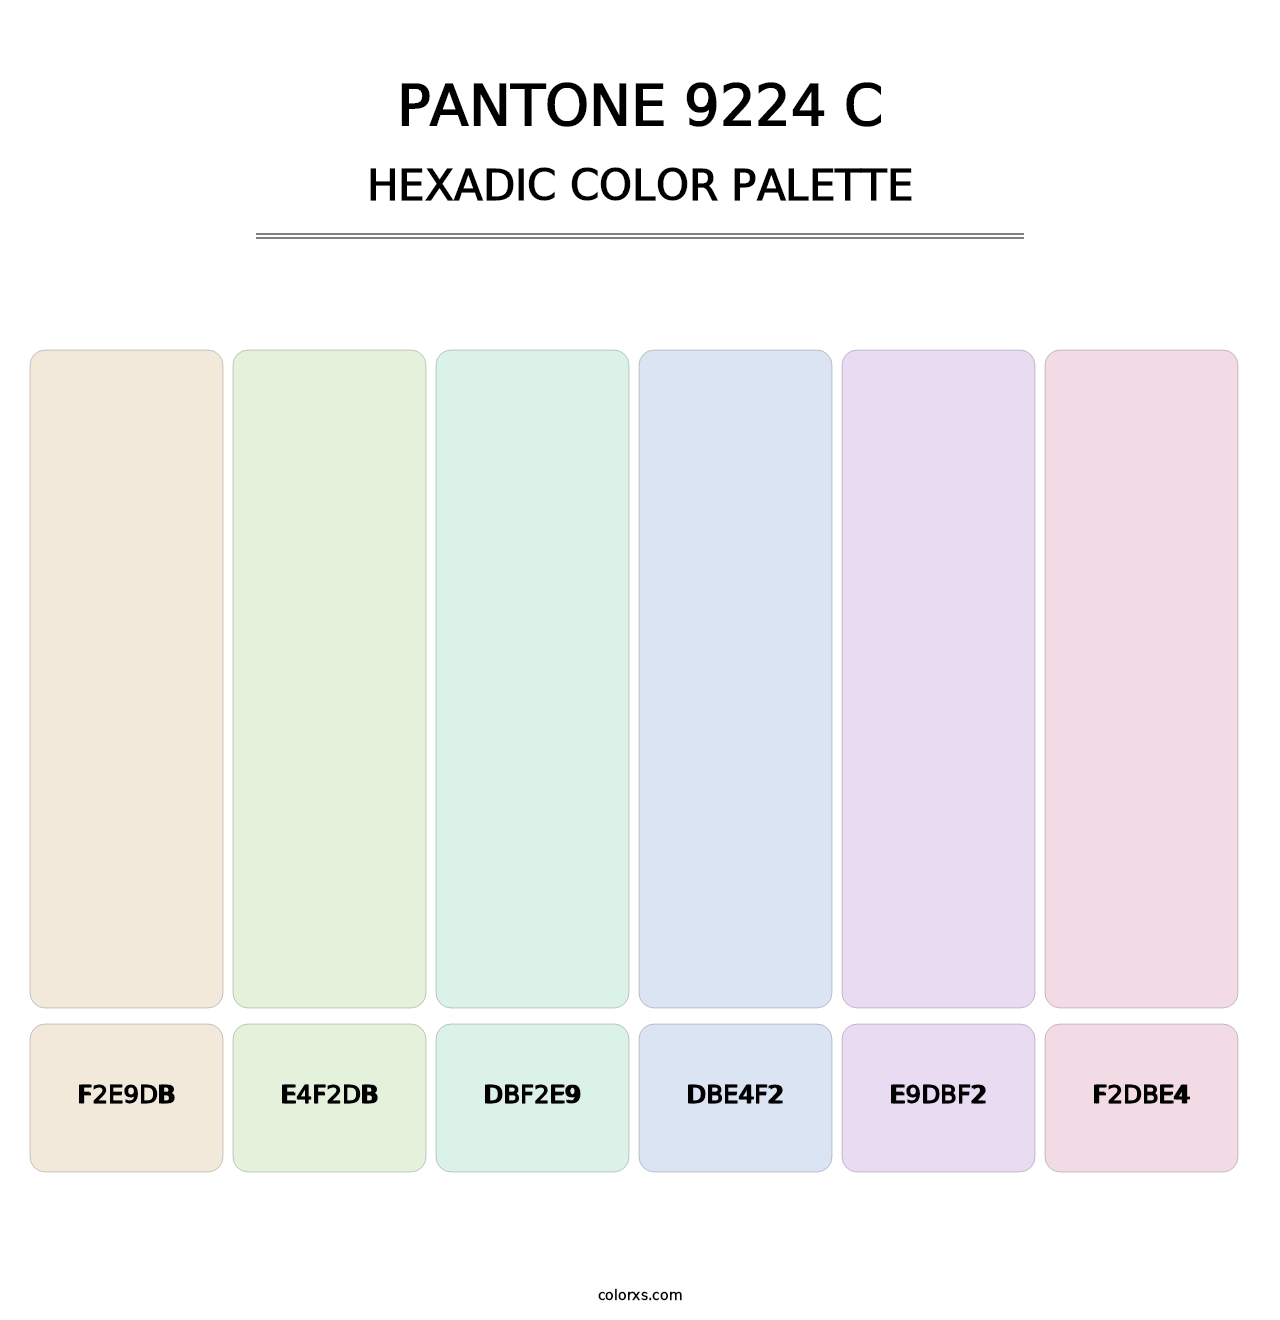 PANTONE 9224 C - Hexadic Color Palette